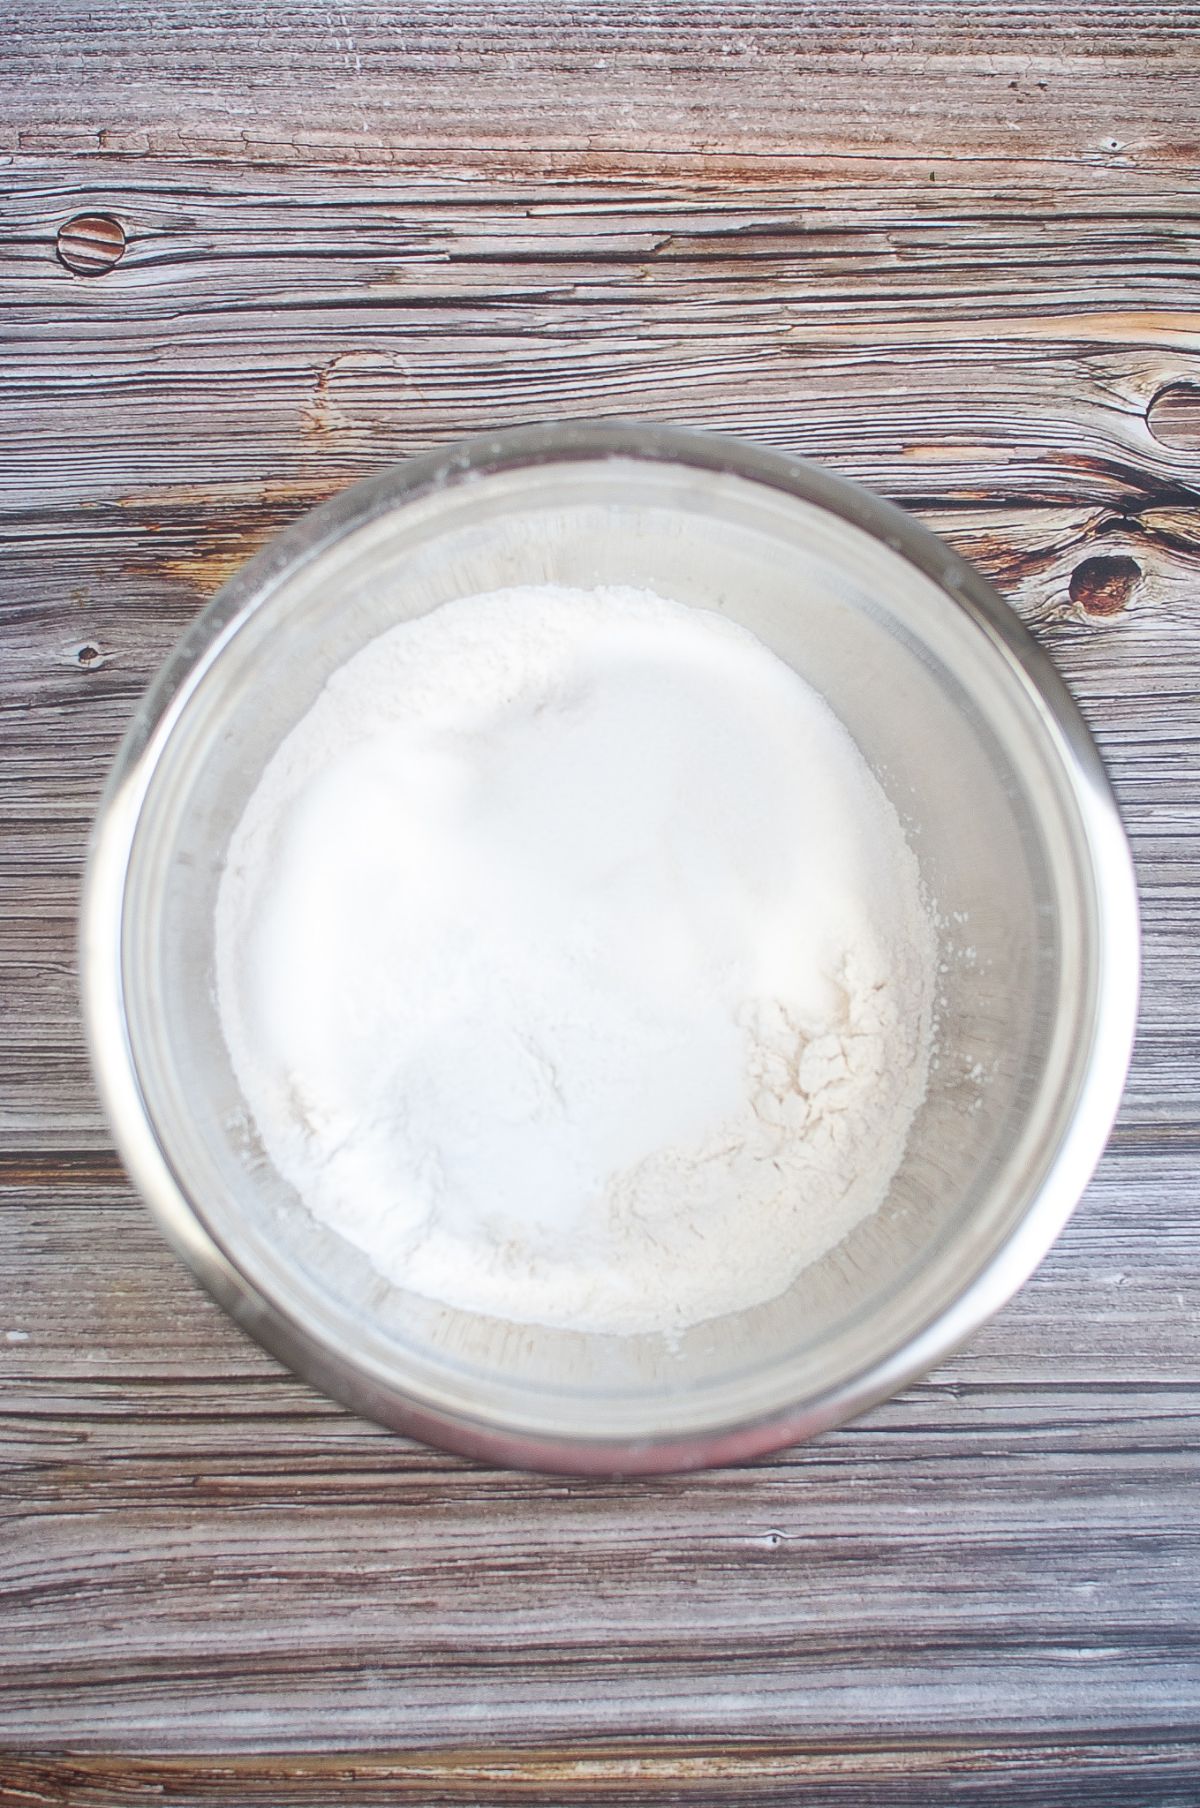 flour, baking powder, baking soda, and salt in a mixing bowl